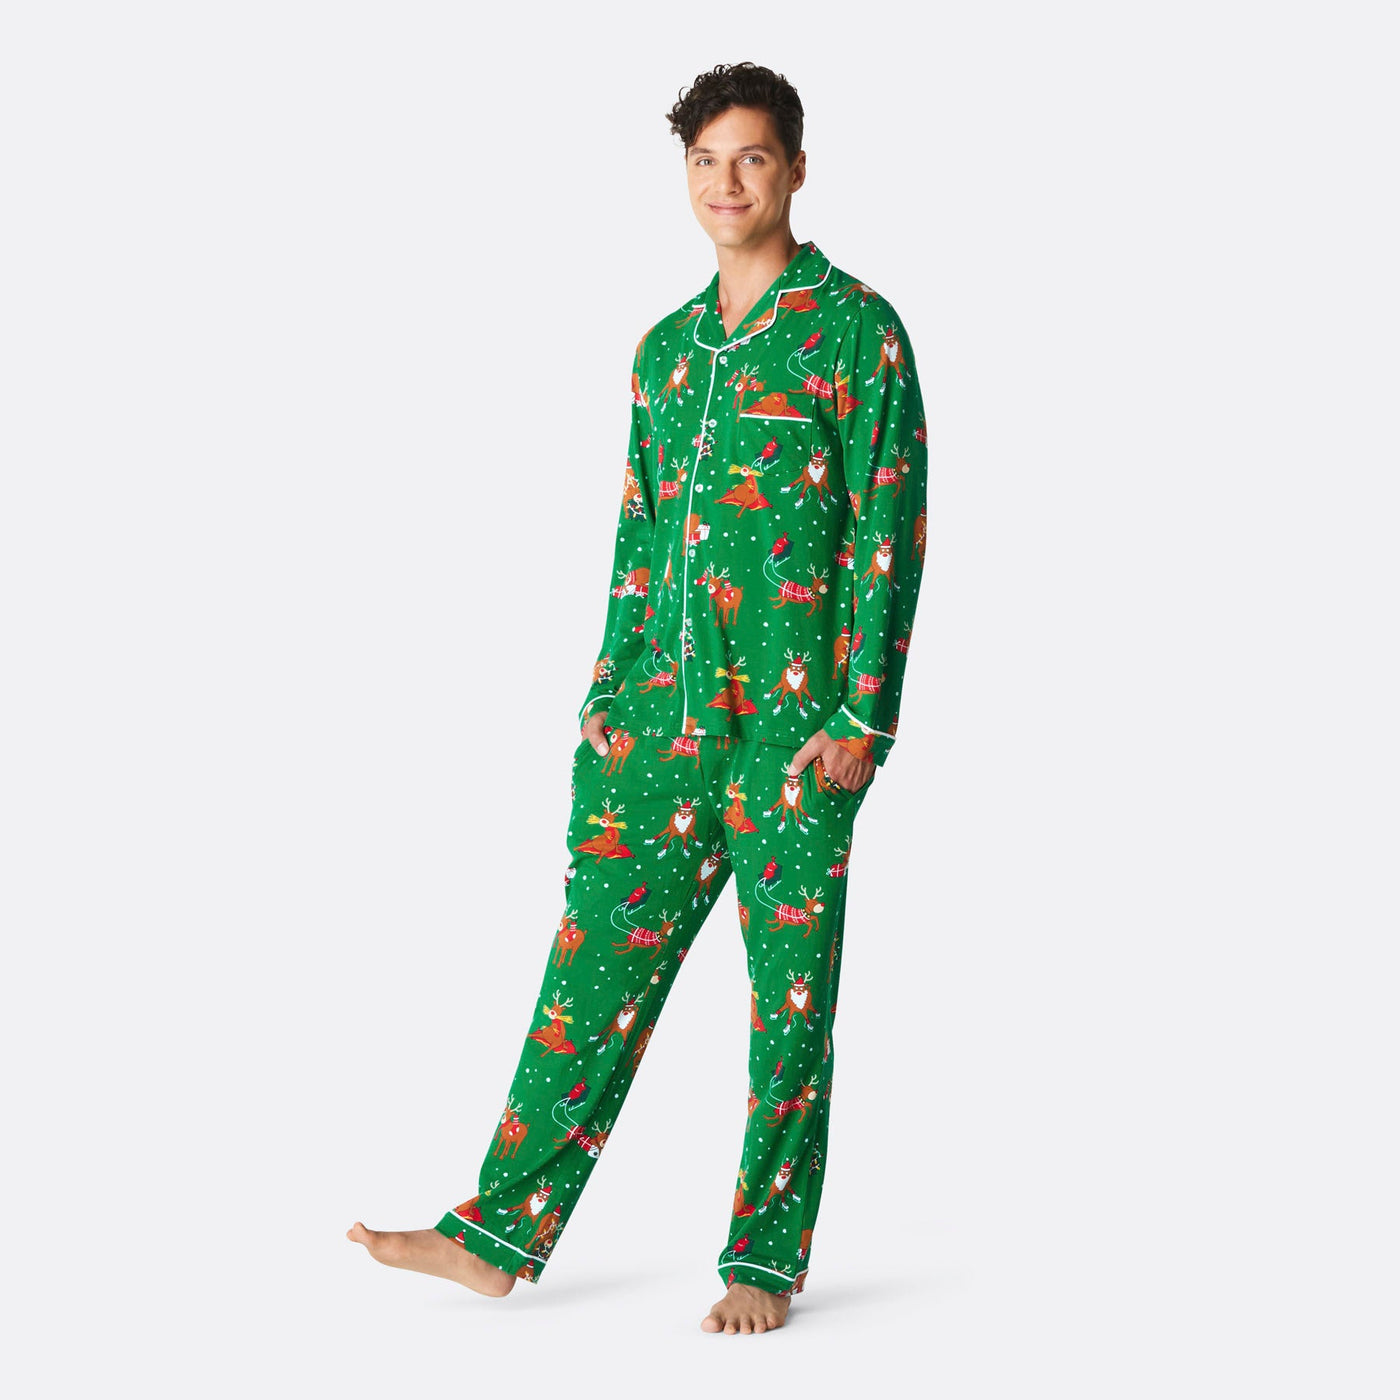 Men's Reindeer Collared Christmas Pyjamas